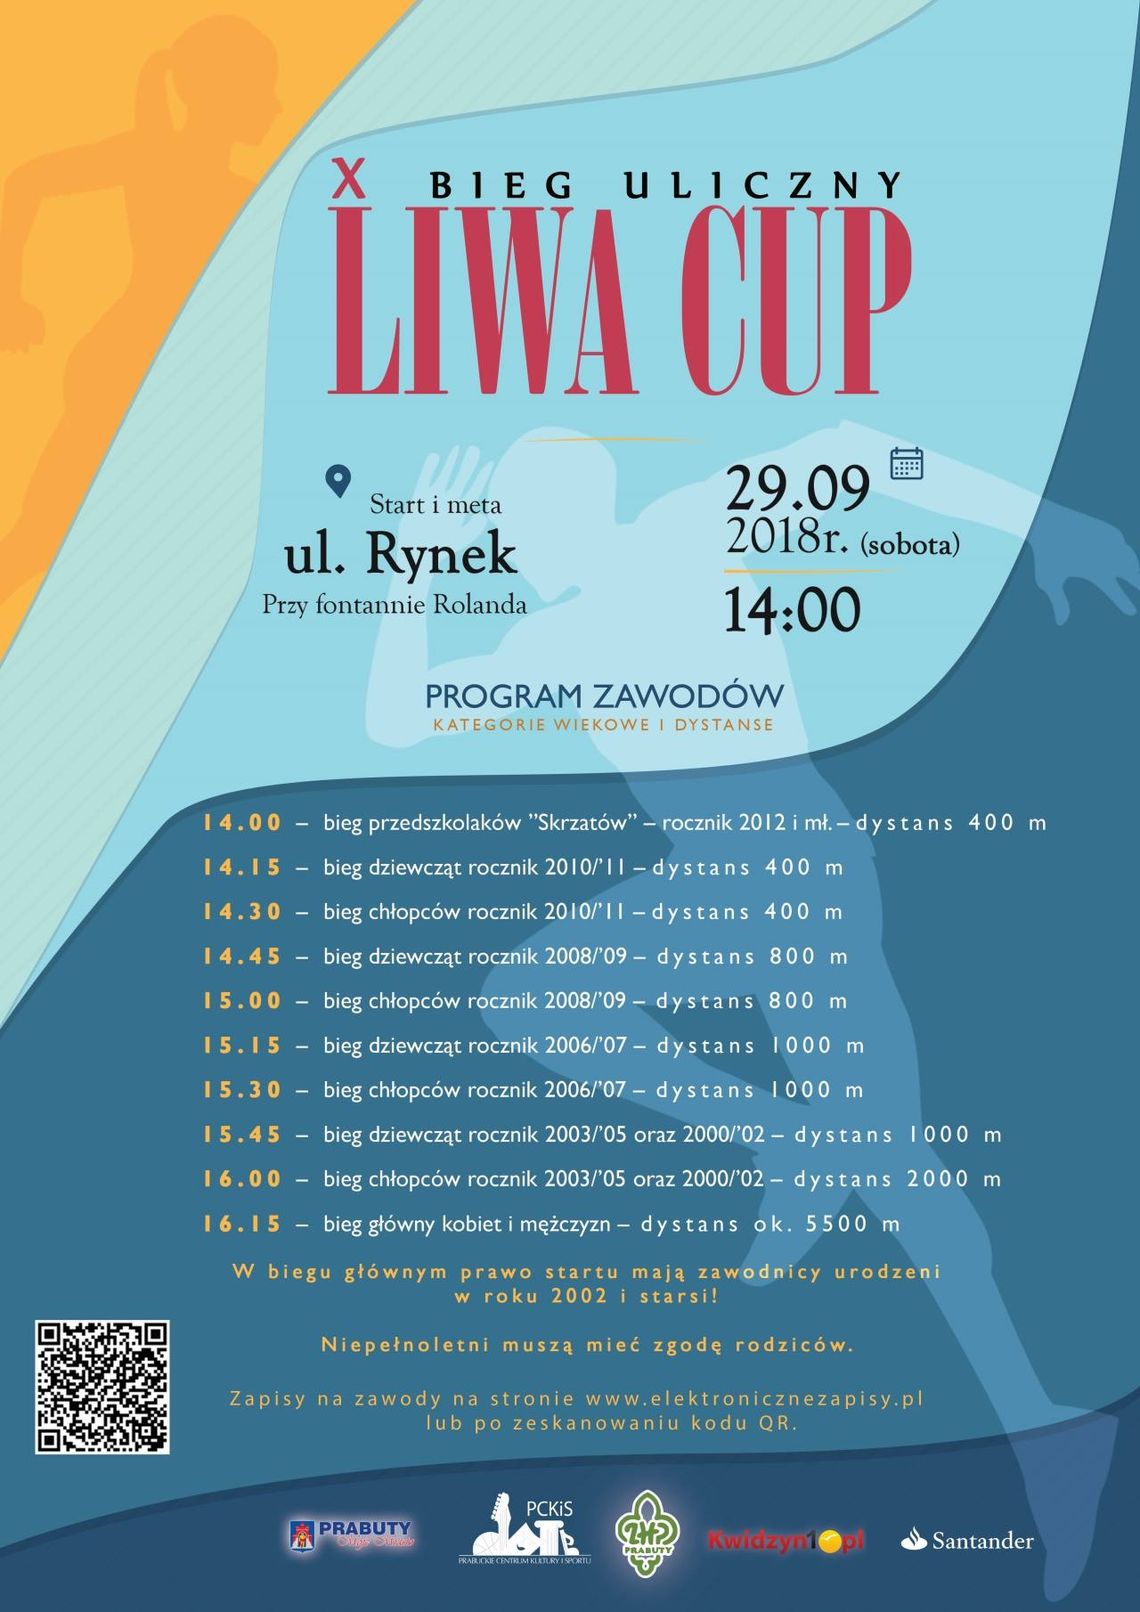 Jubileuszowa edycja Liva Cup